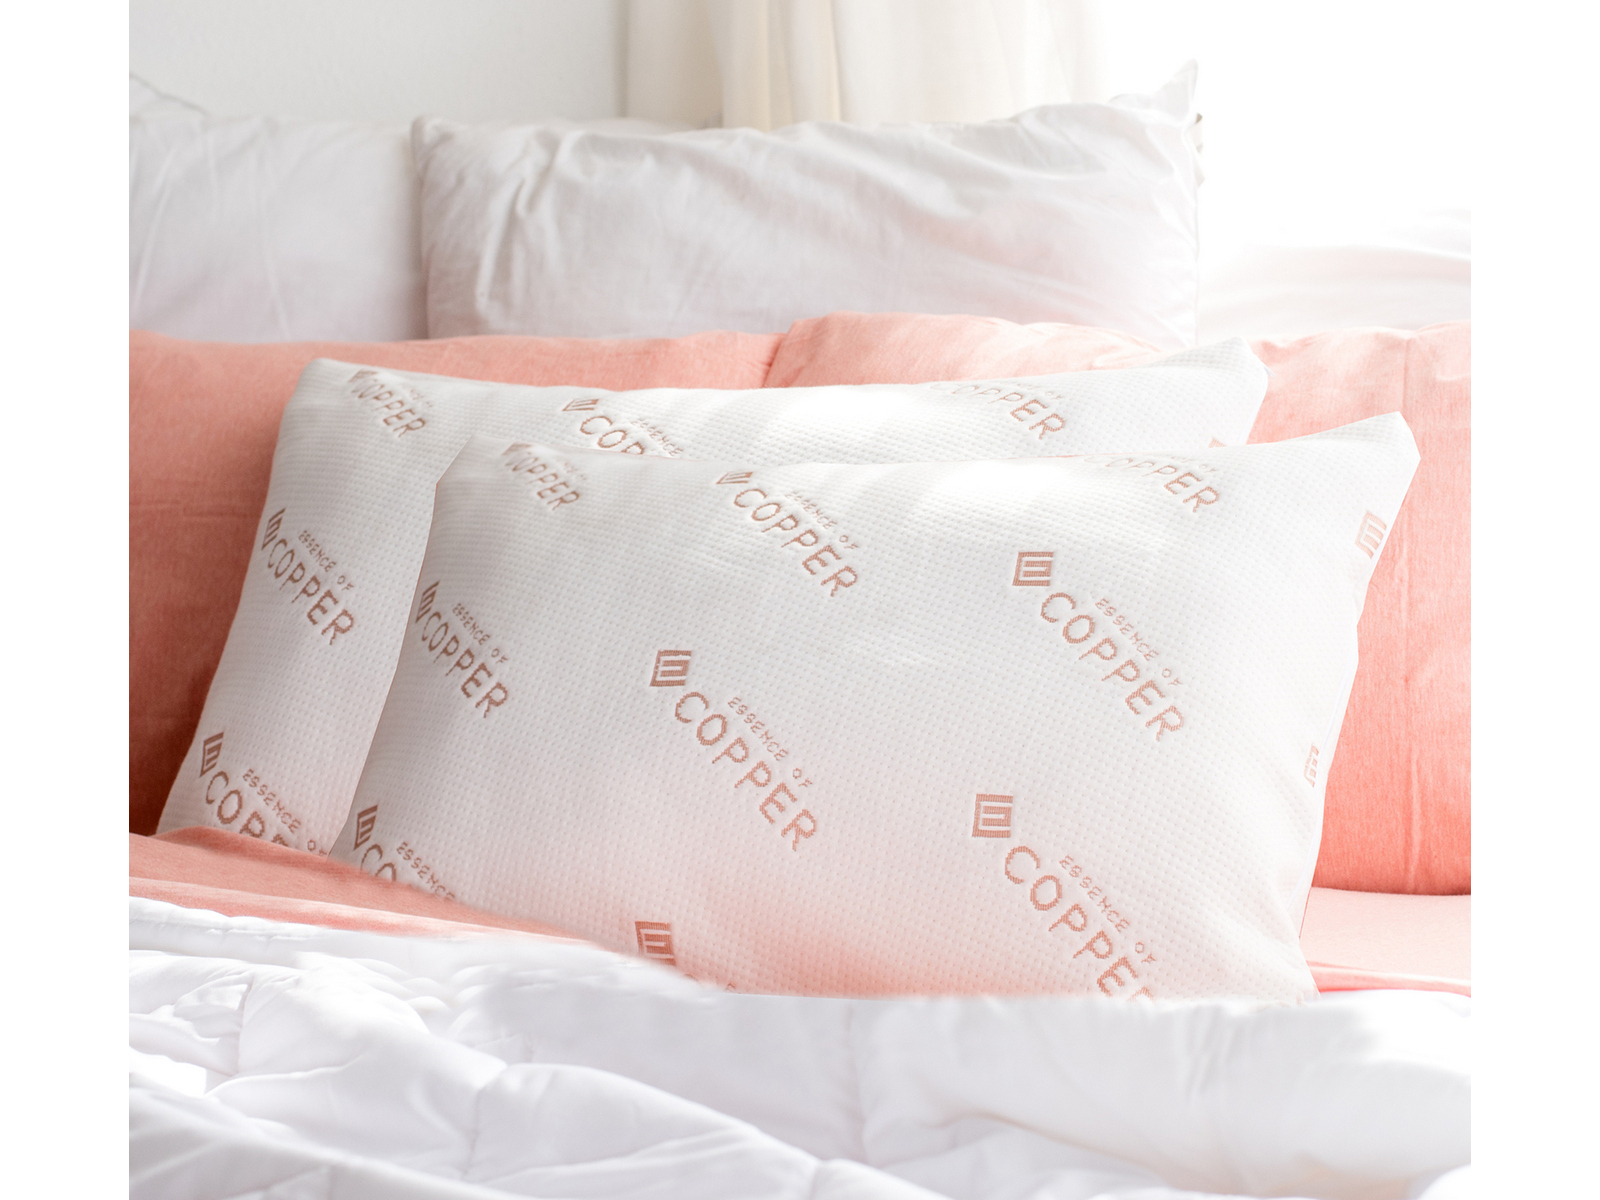 Simmons Standard/Queen Essence of Copper Pillows - 2 Pack